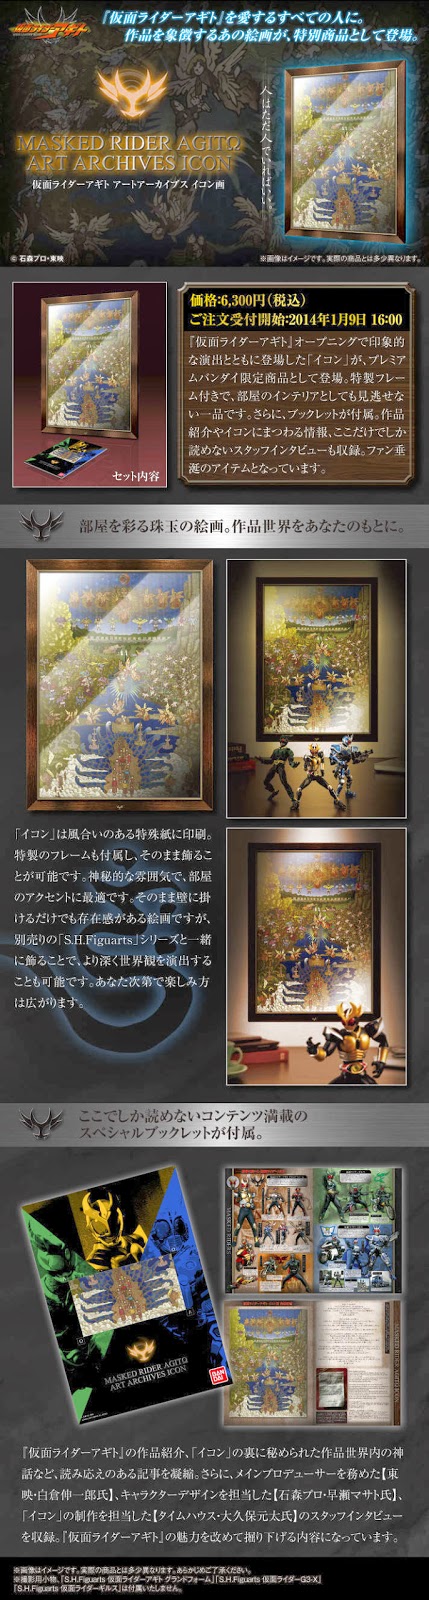 Jefusion Japanese Entertainment Blog The Center Of Tokusatsu Kamen Rider Agito Art Archives Icon Revealed